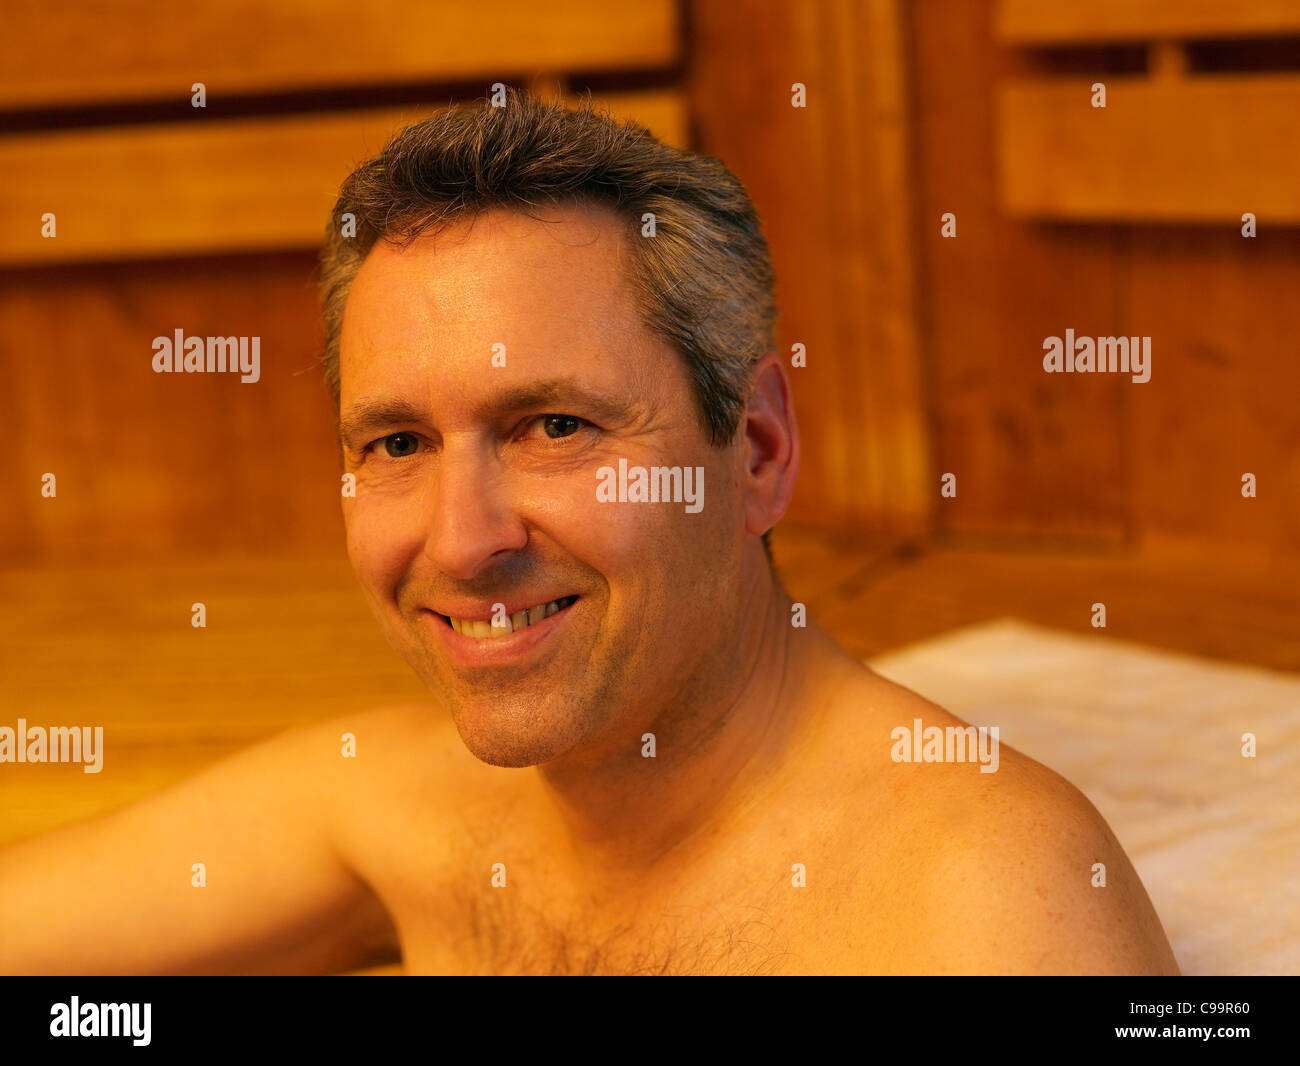 Germany, Hamburg, Mature man in sauna, smiling, portrait Stock Photo ...